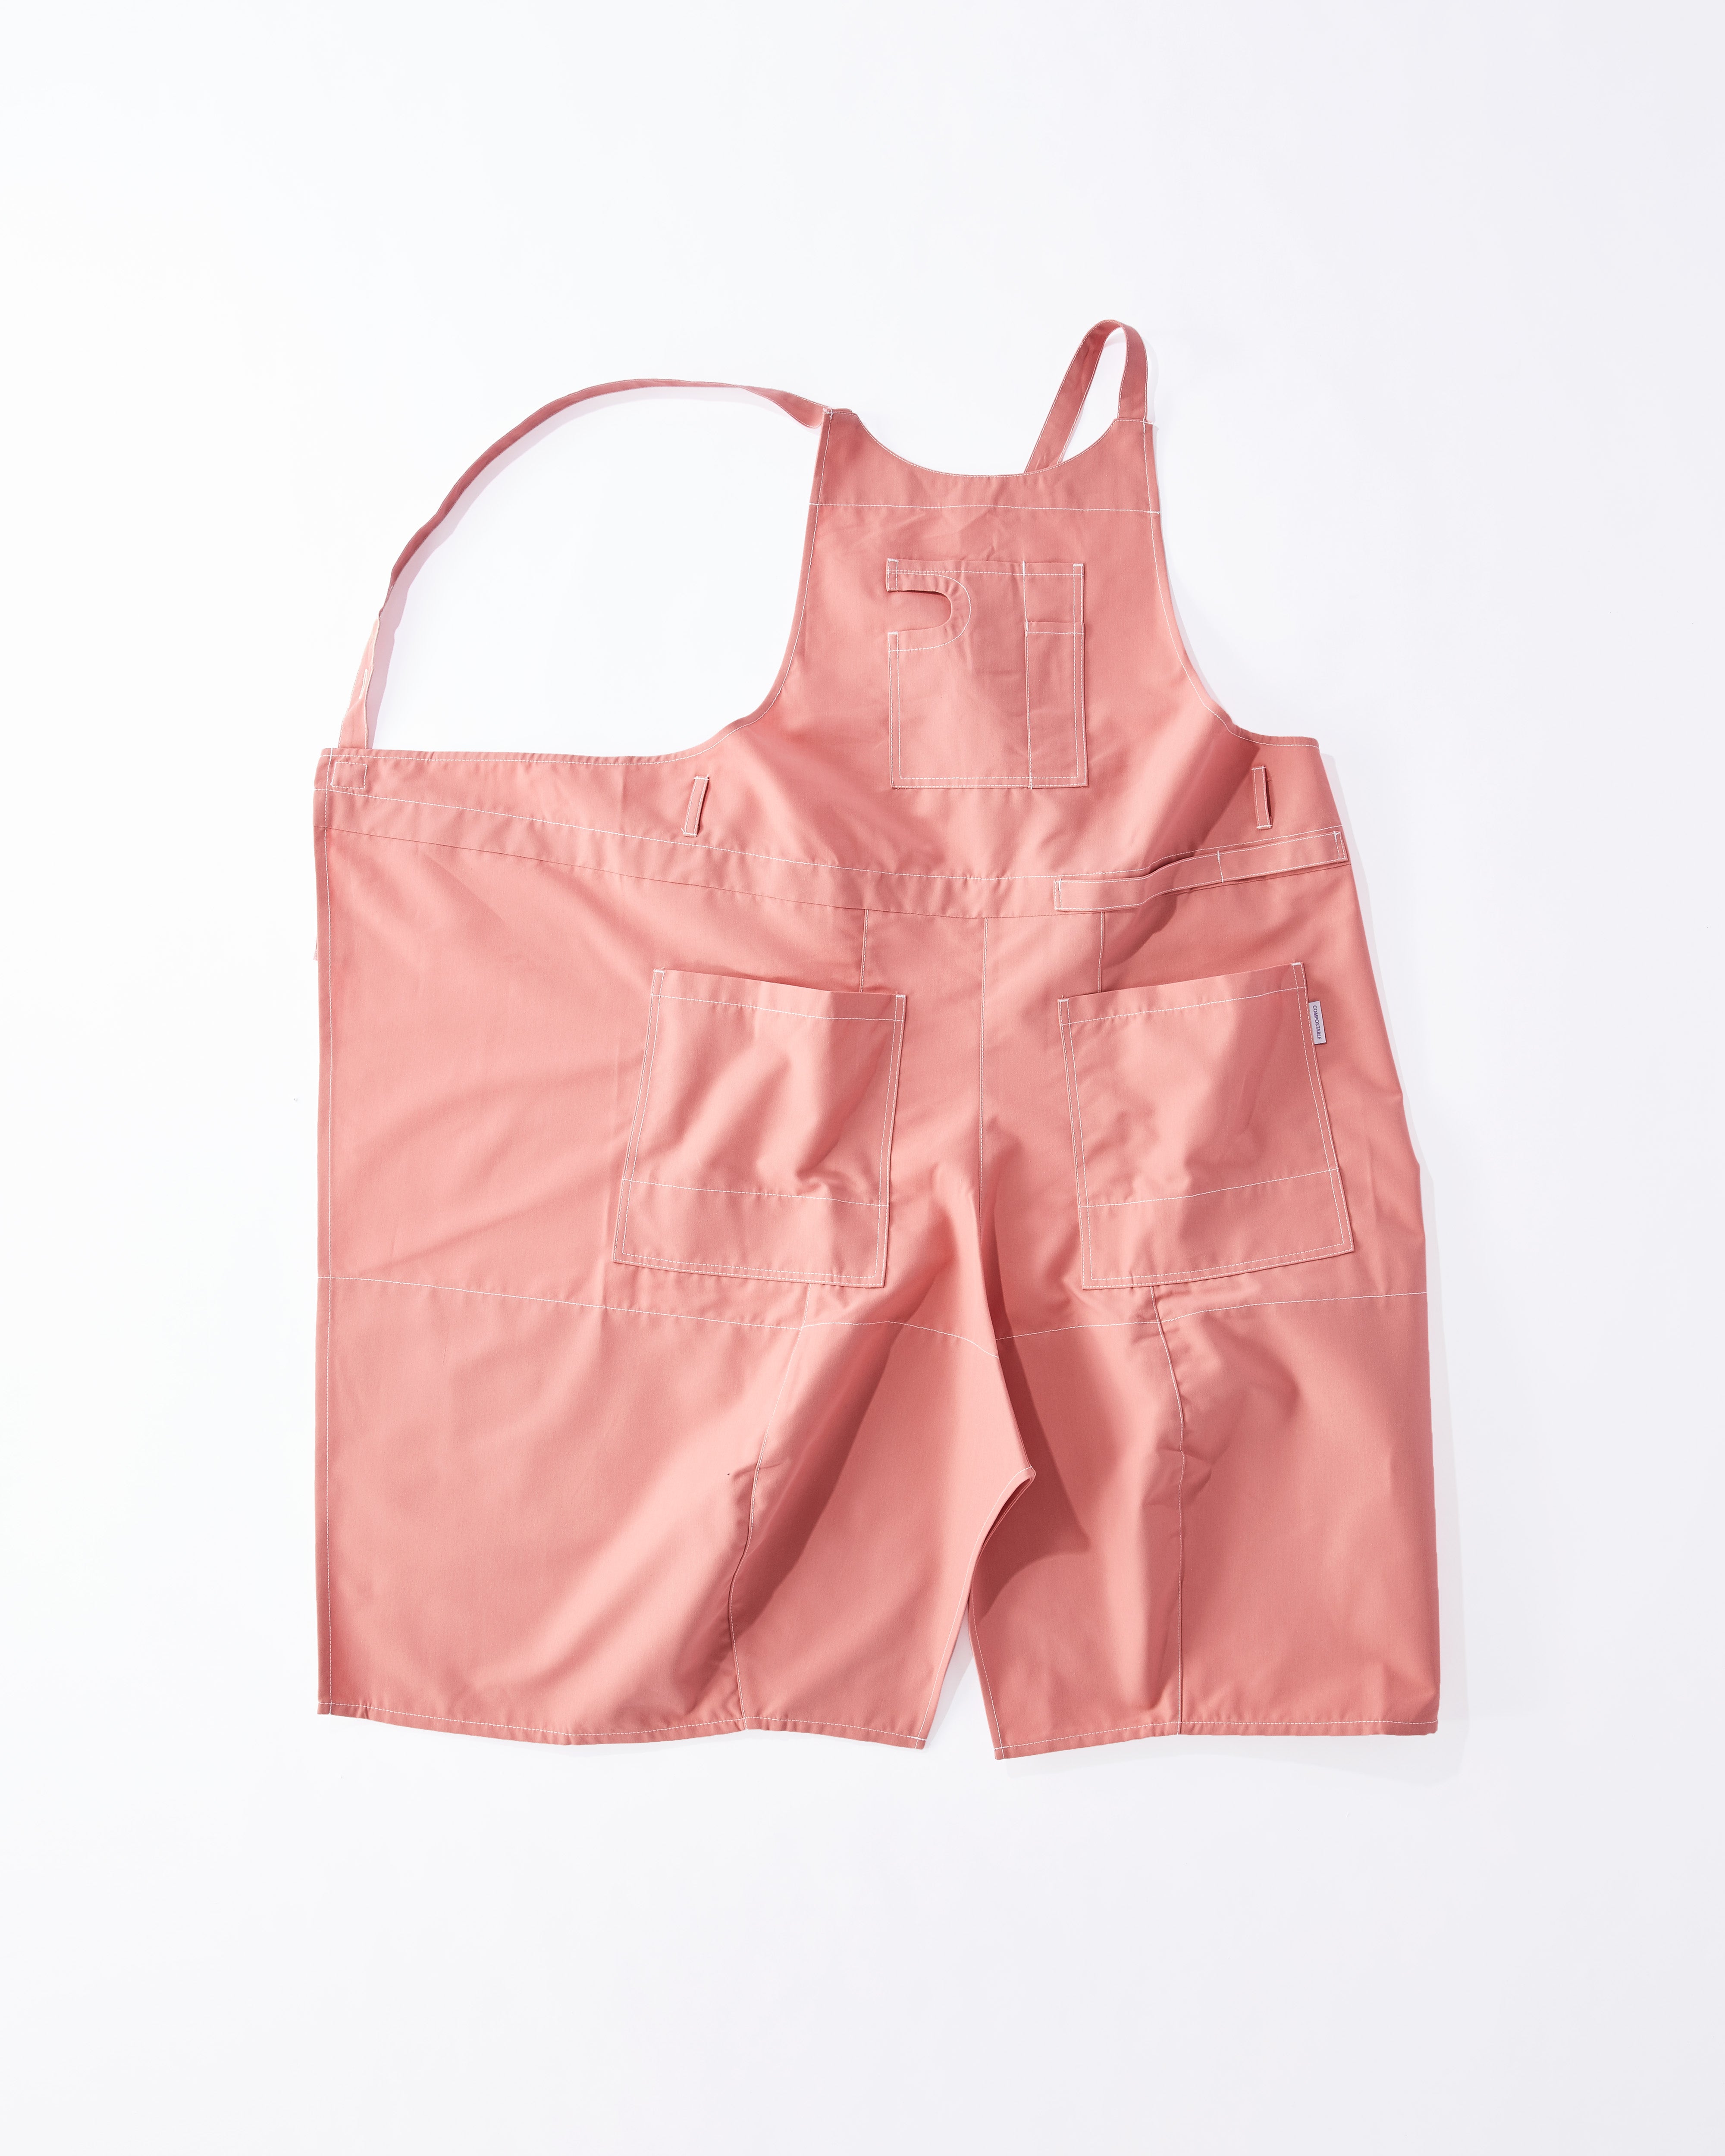 Utility apron  Free size / Coral pink